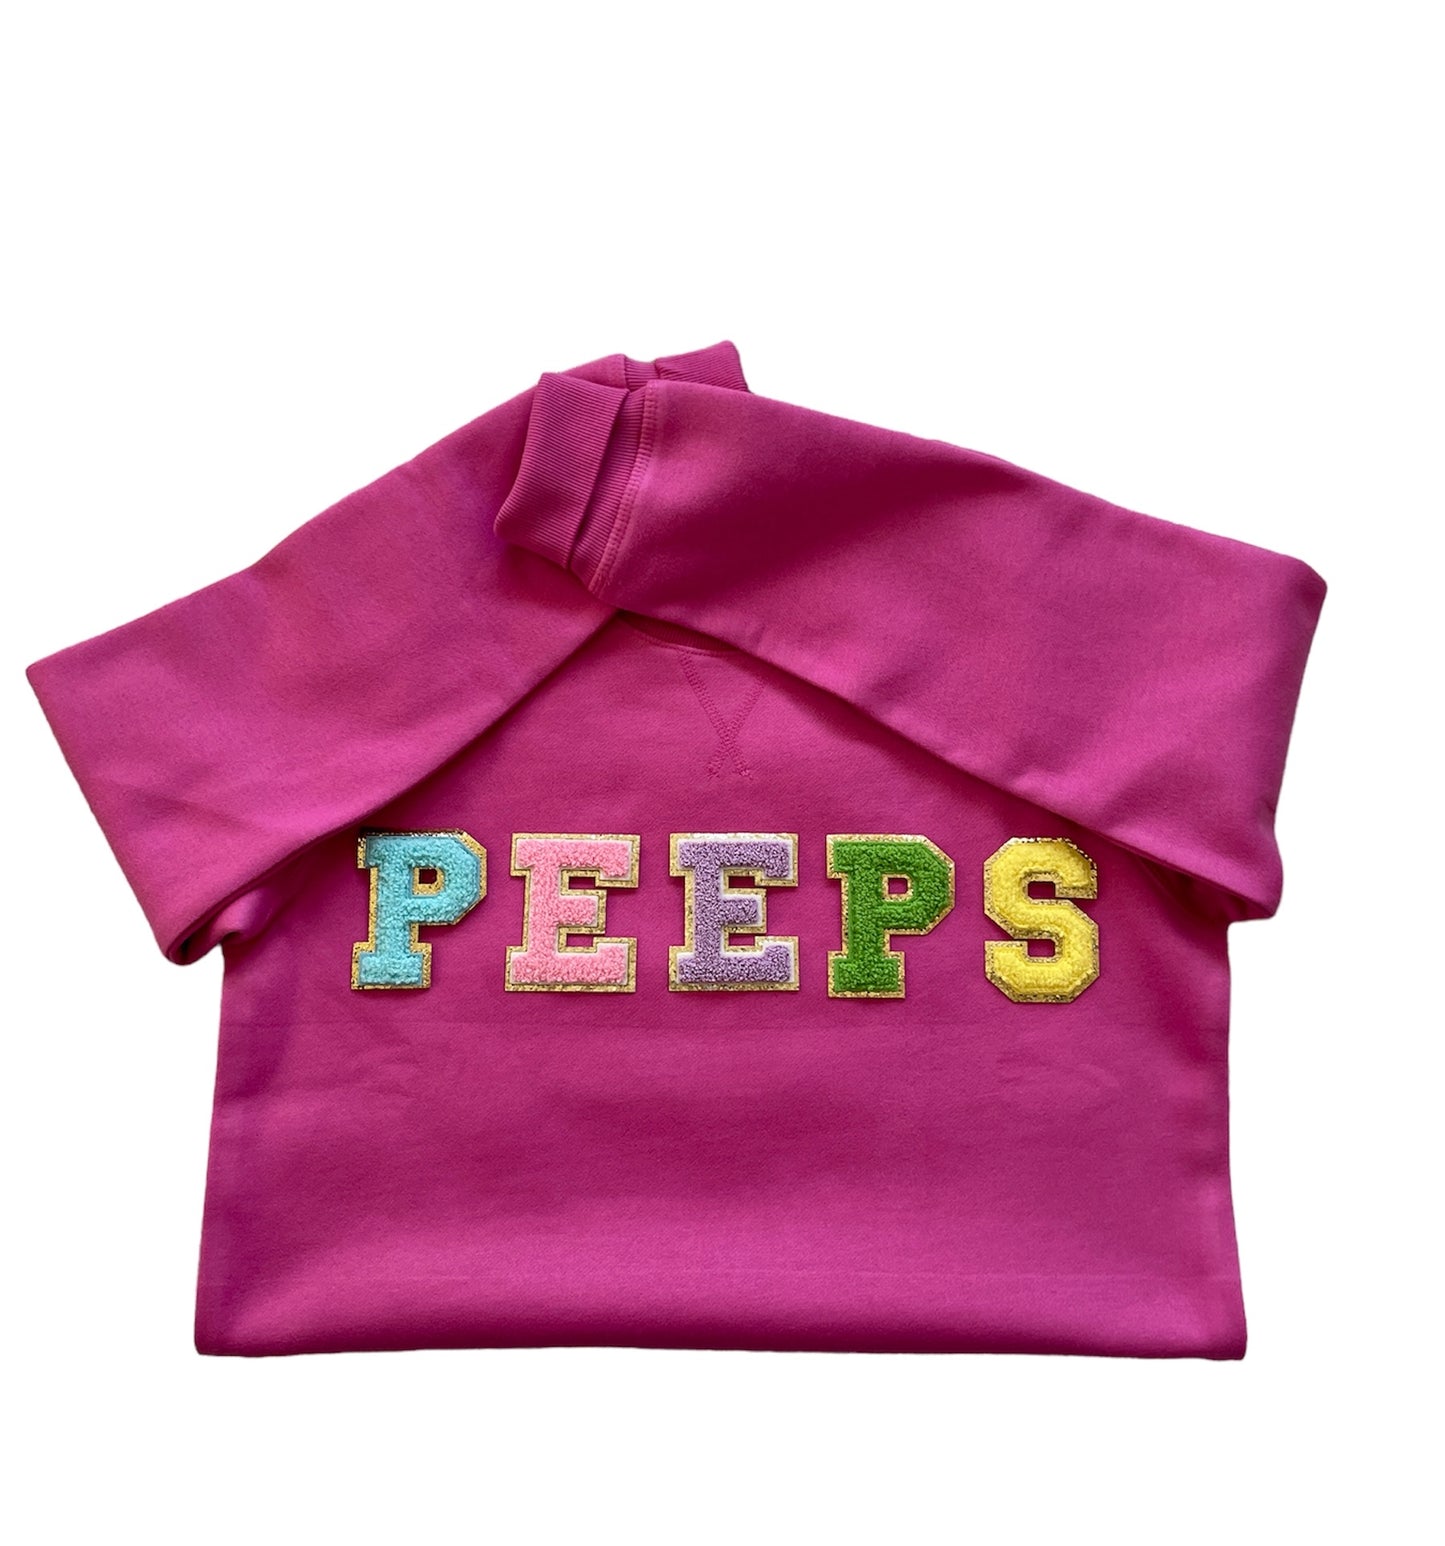 Peeps Patch Sweatshirt